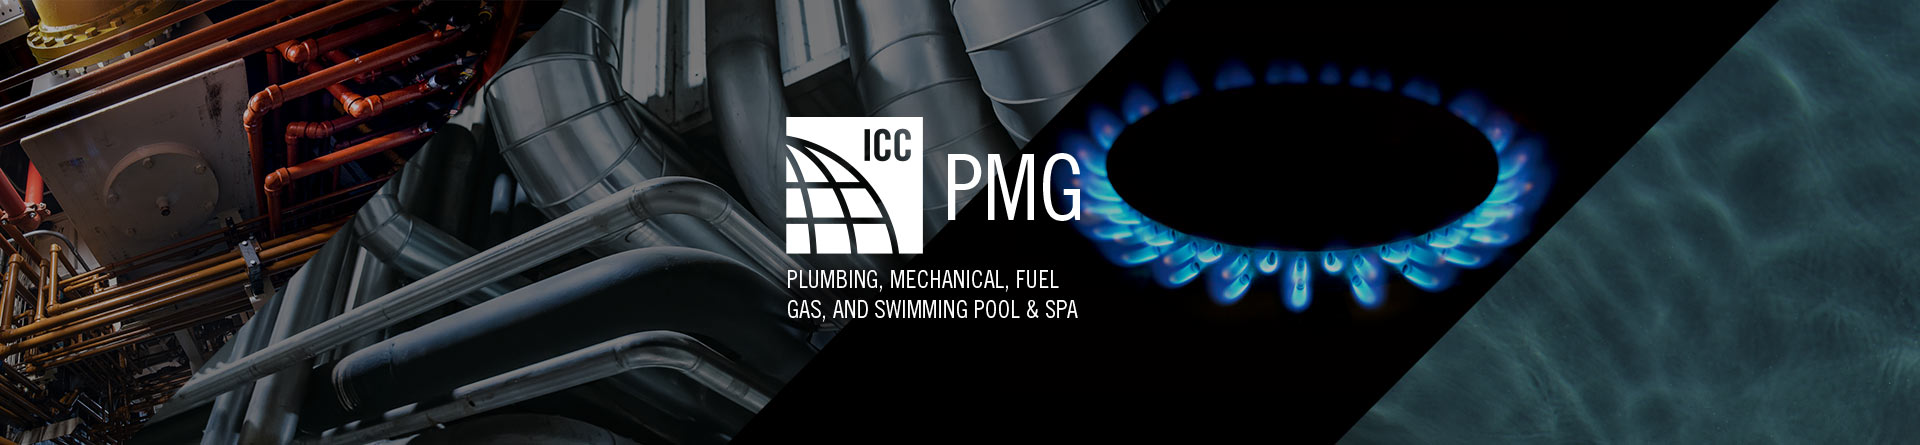 PMG Partner Resources